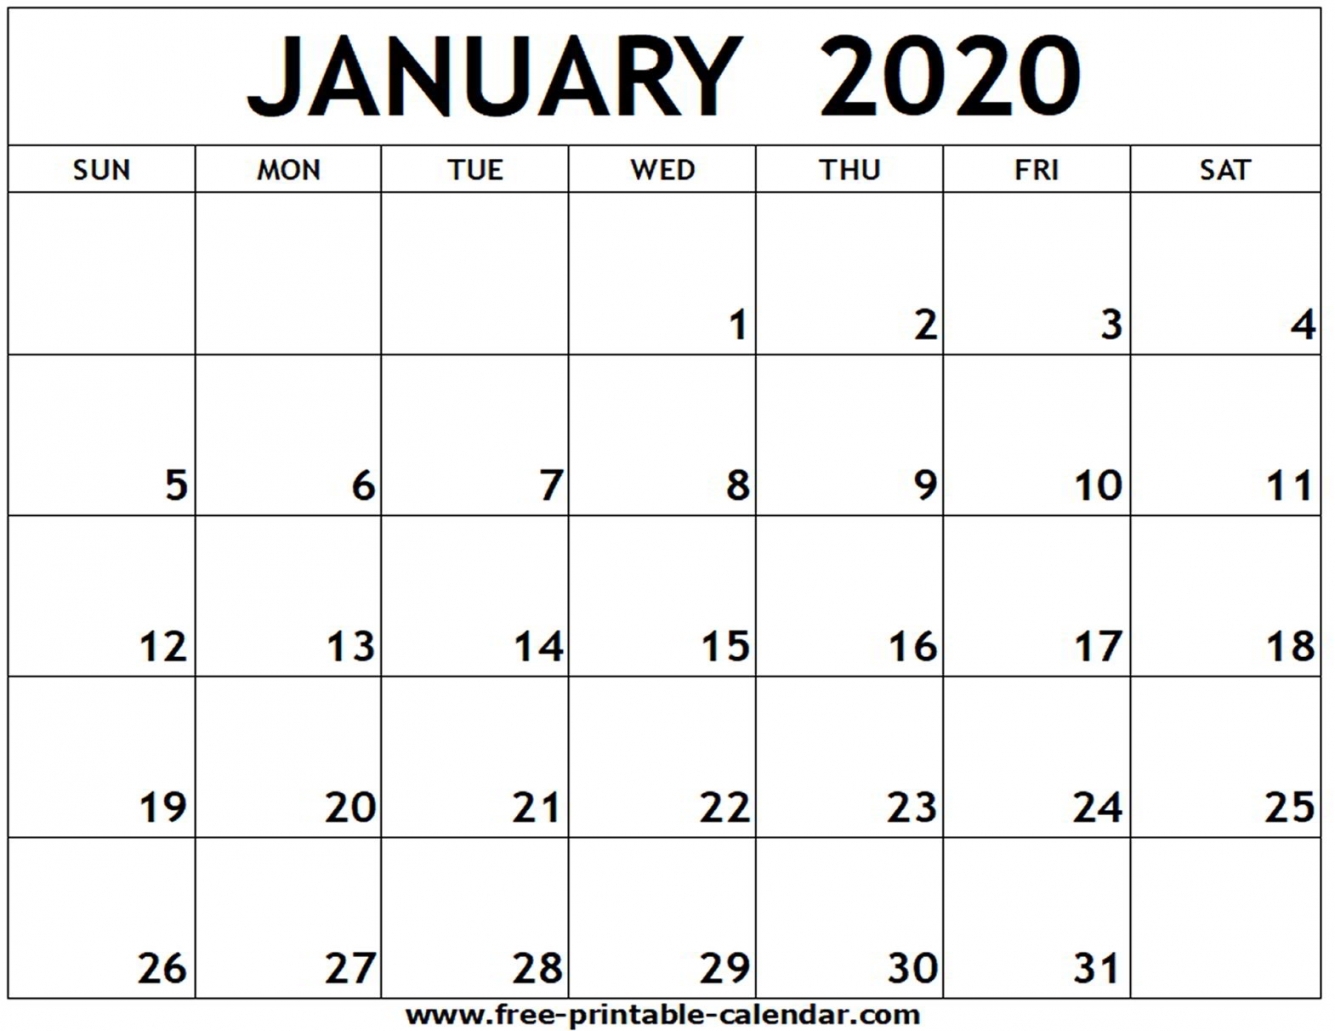 Monthly Printable Calendar 2020